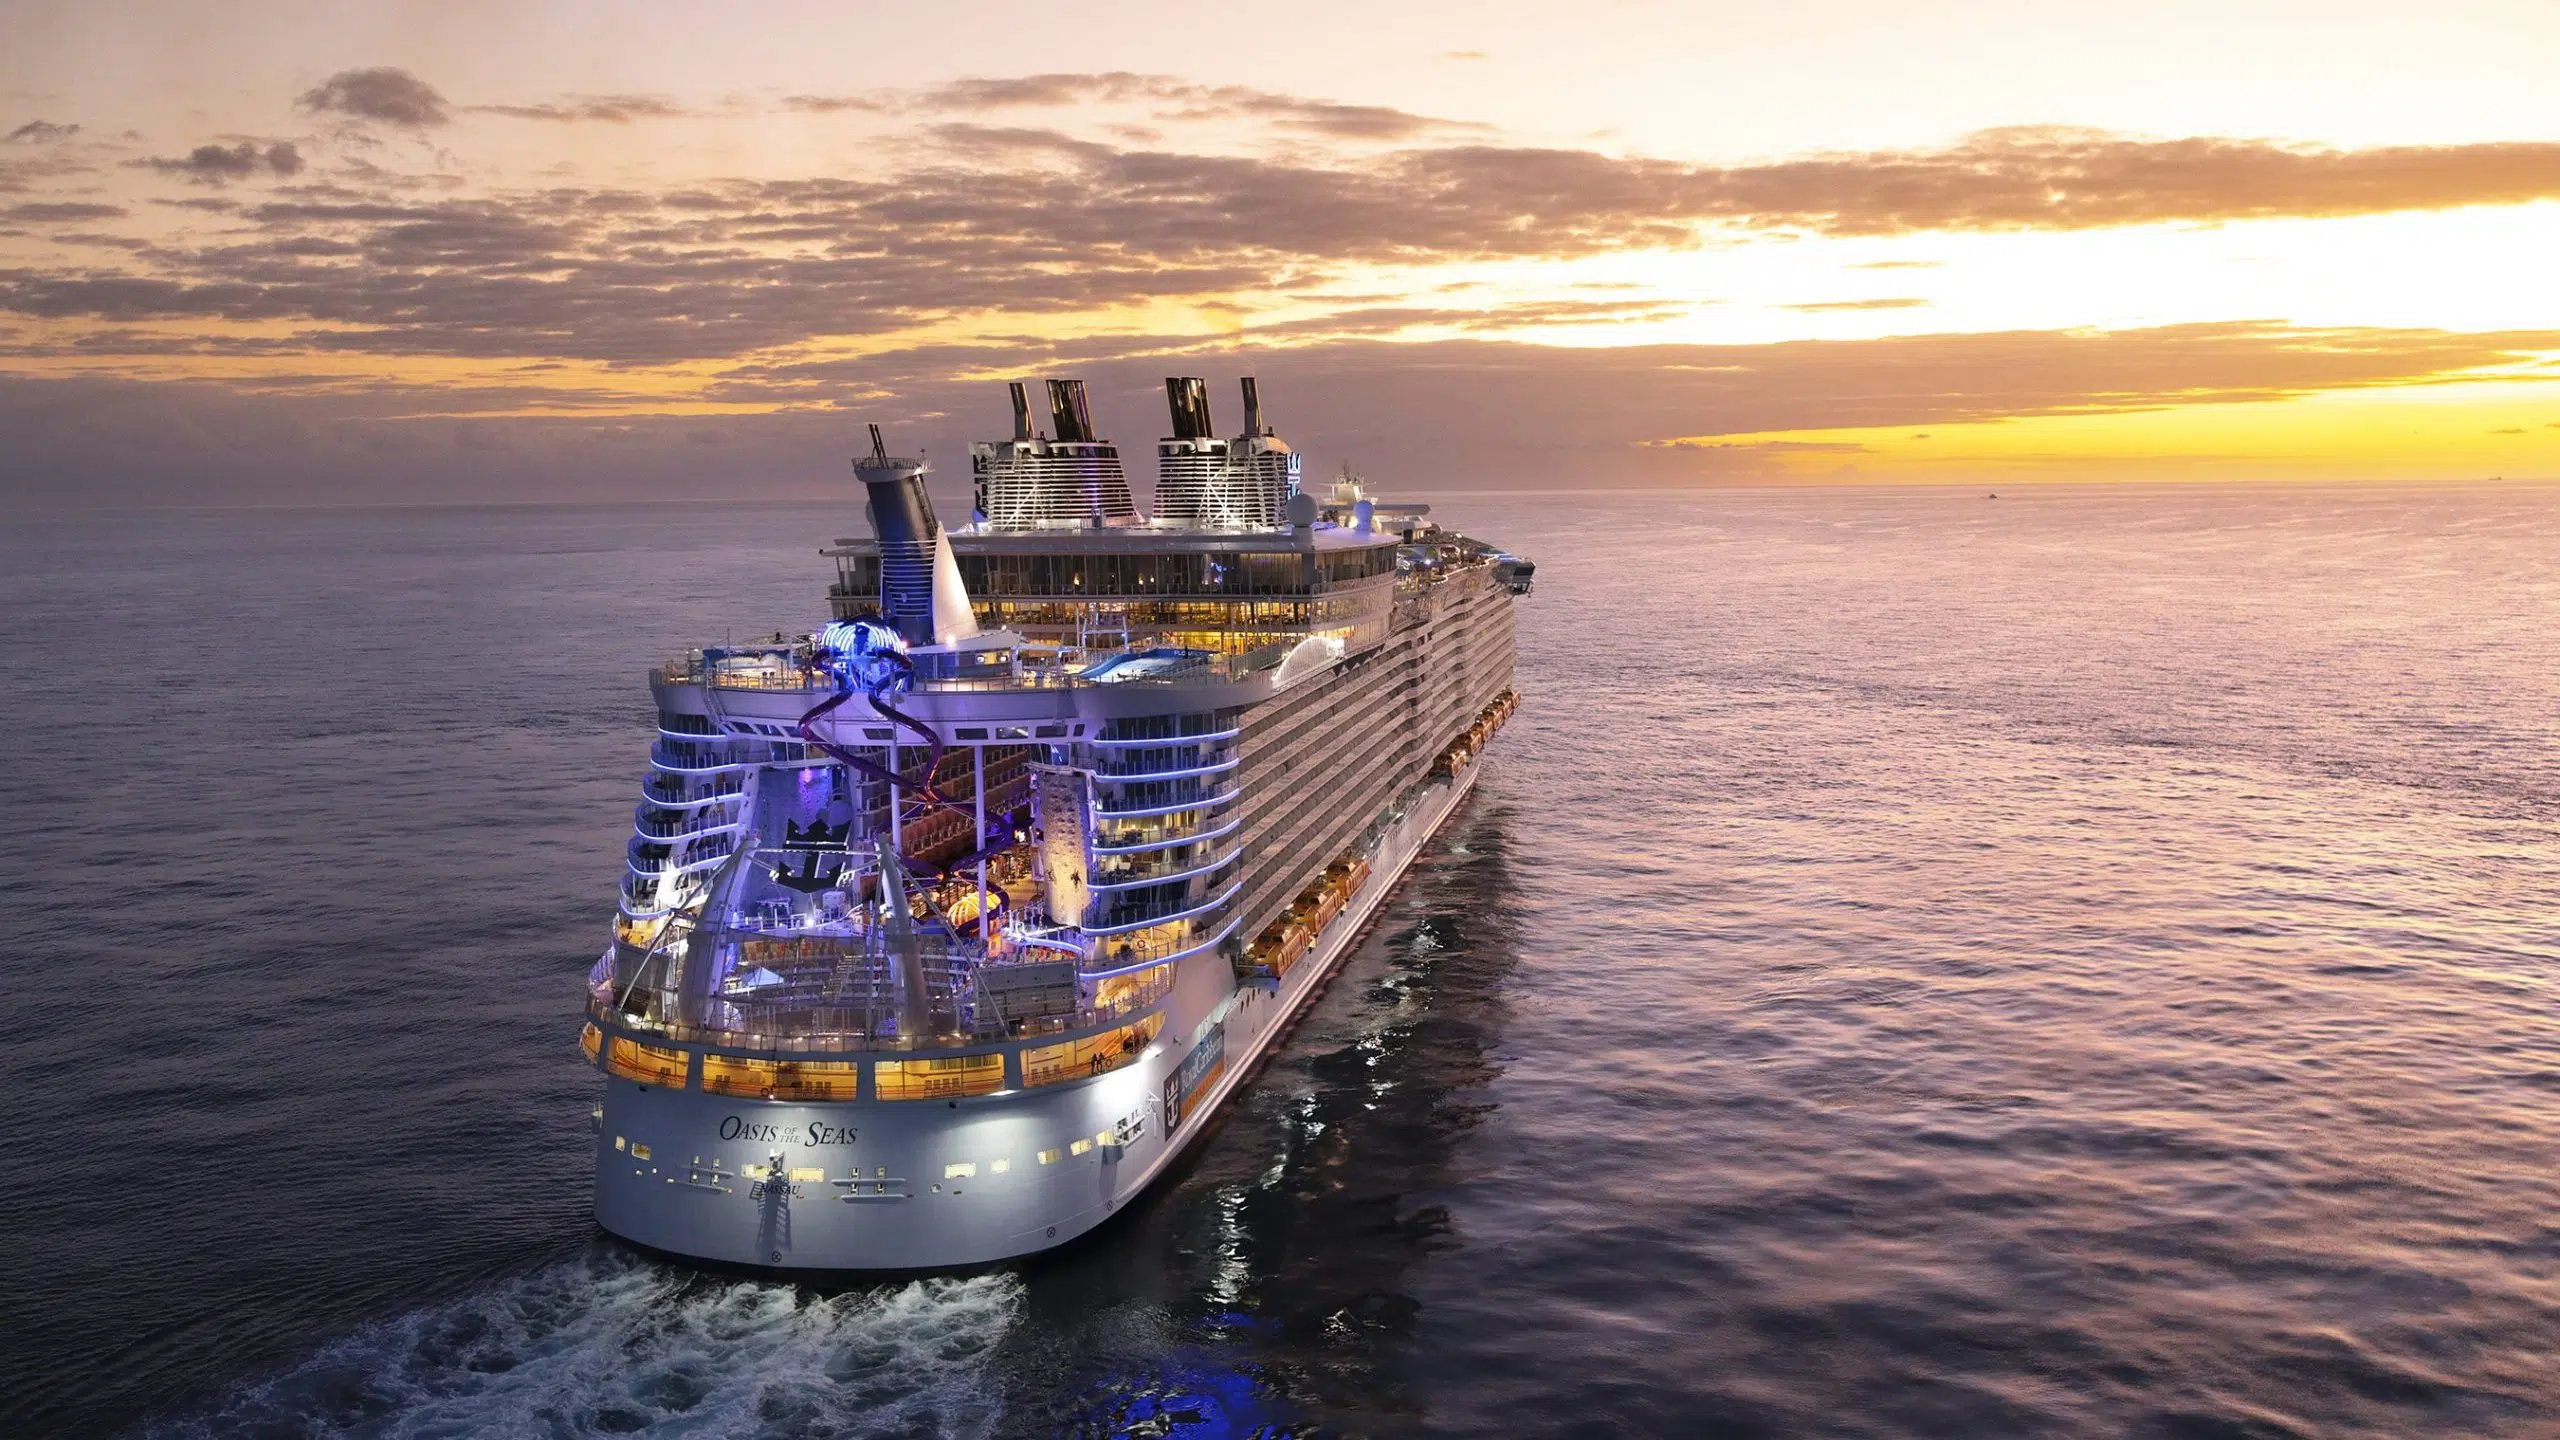 Saint John's Largest Cruise Ship To Dock June 8